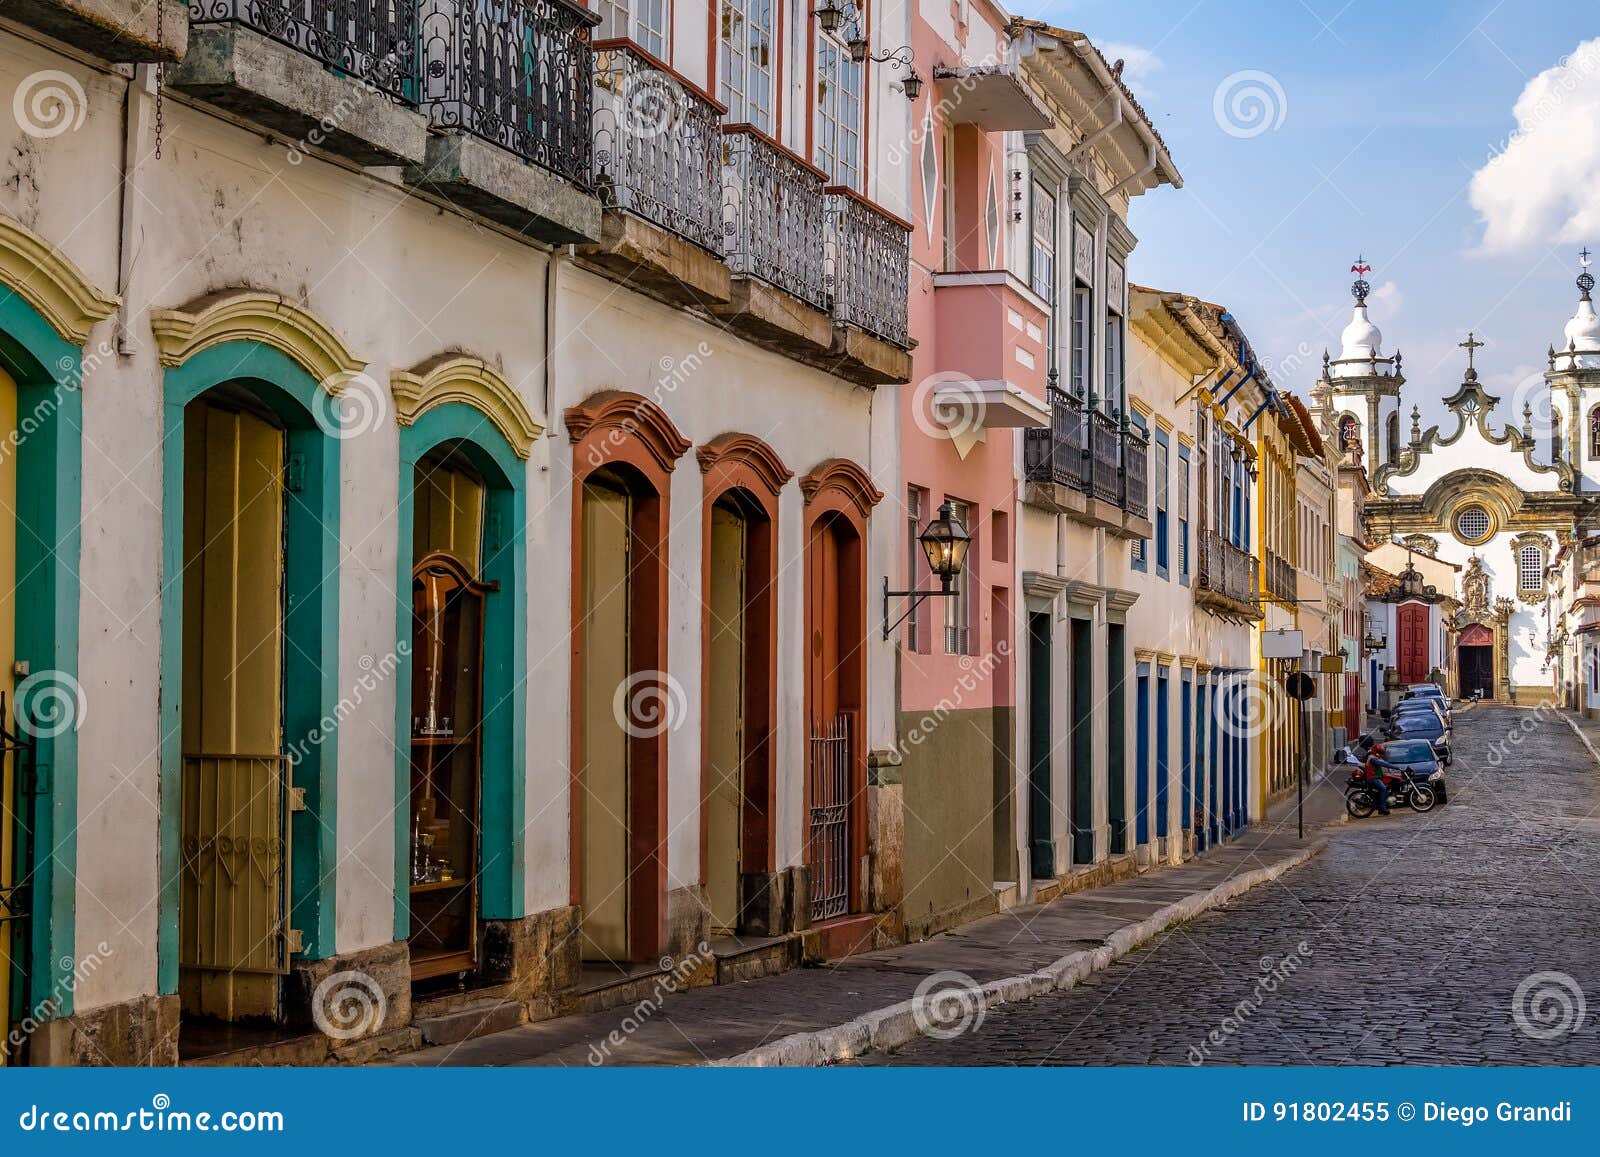 street view of sao joao del rei colonial buildings - sao joao del rei, minas gerais, brazil